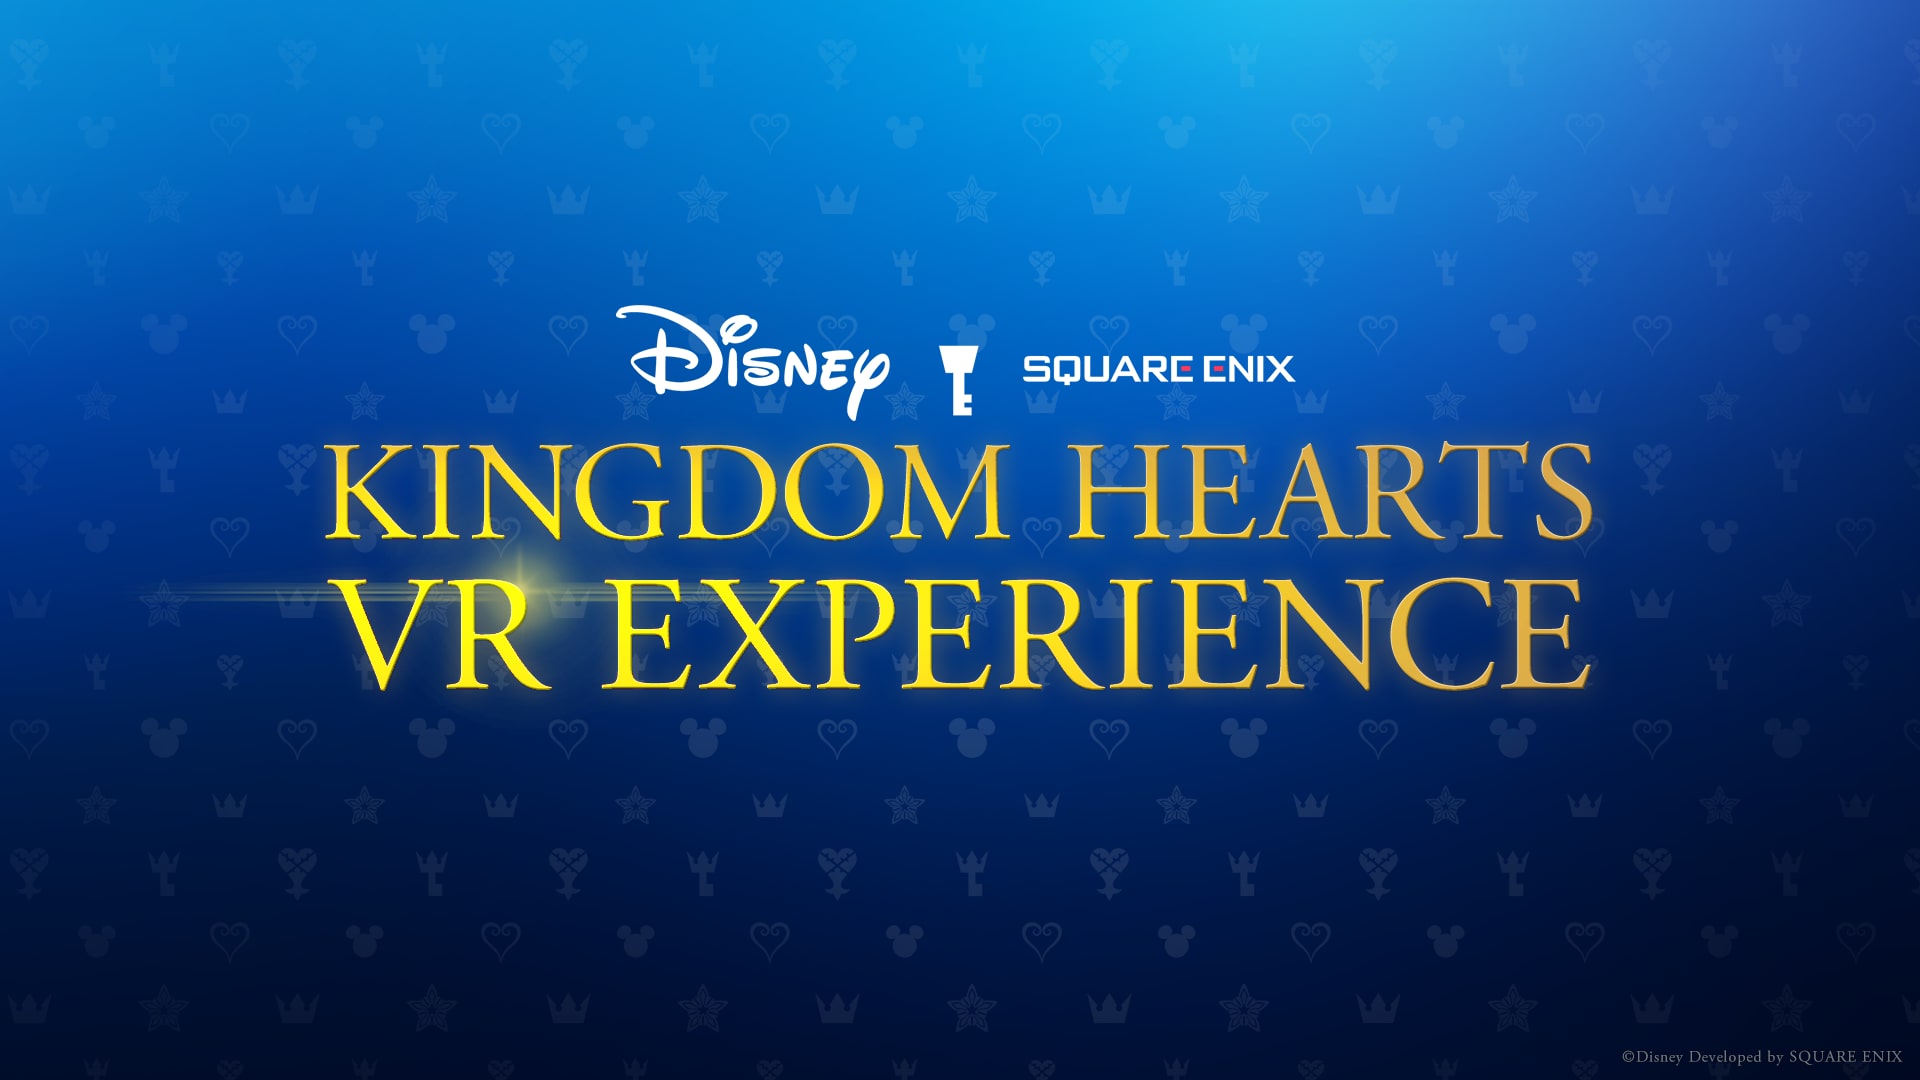 KINGDOM HEARTS VR